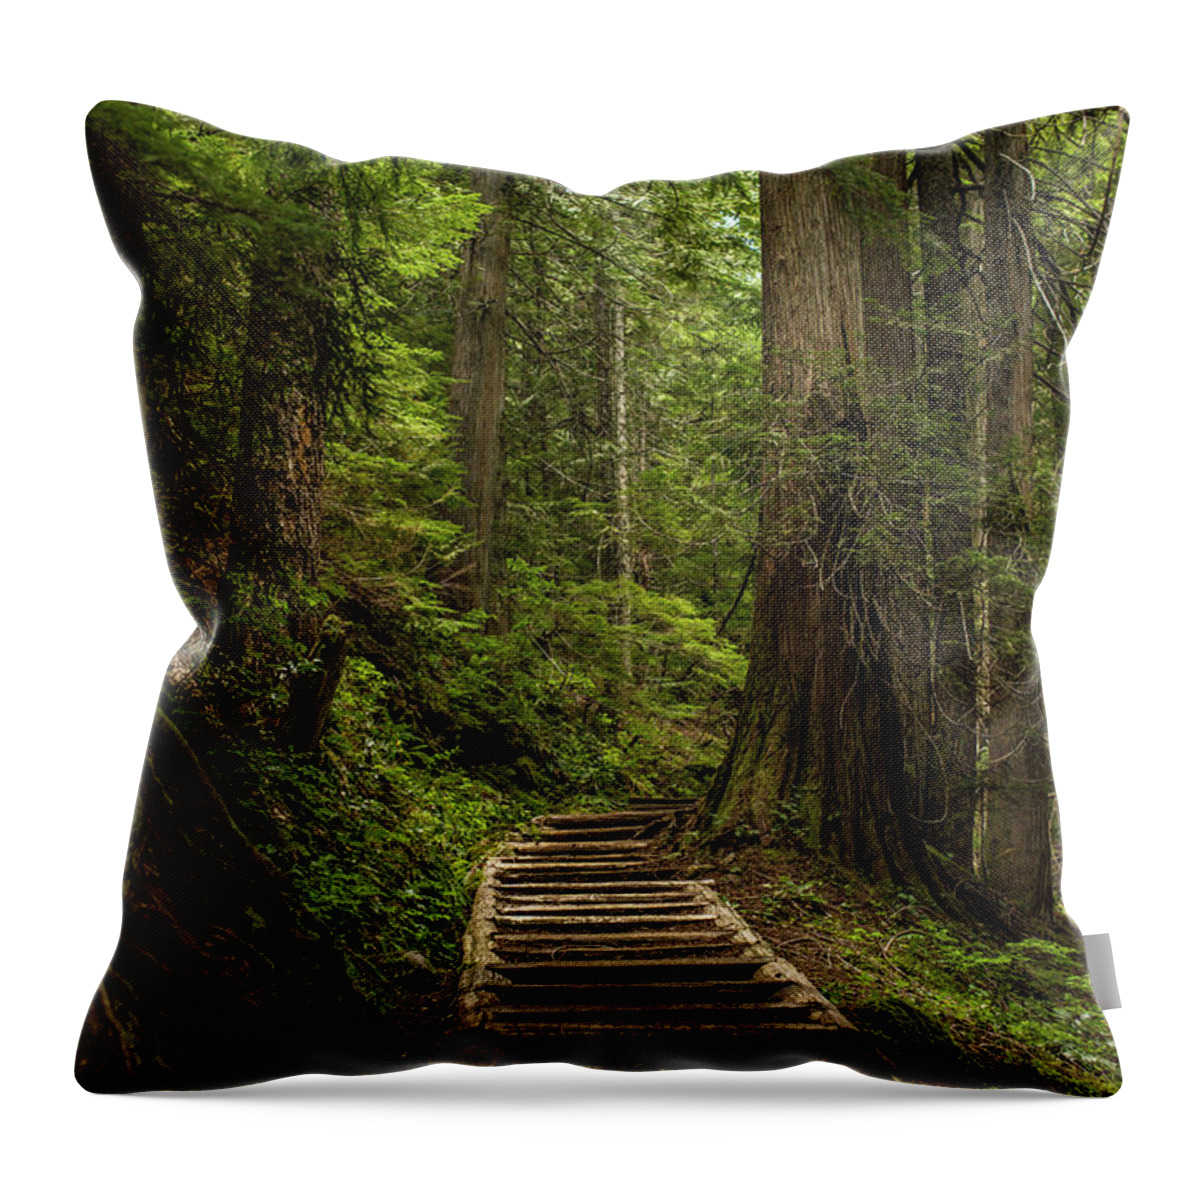 Hiking Trail Throw Pillow featuring the photograph Hiking in Mt. Rainier, Washington by Julieta Belmont